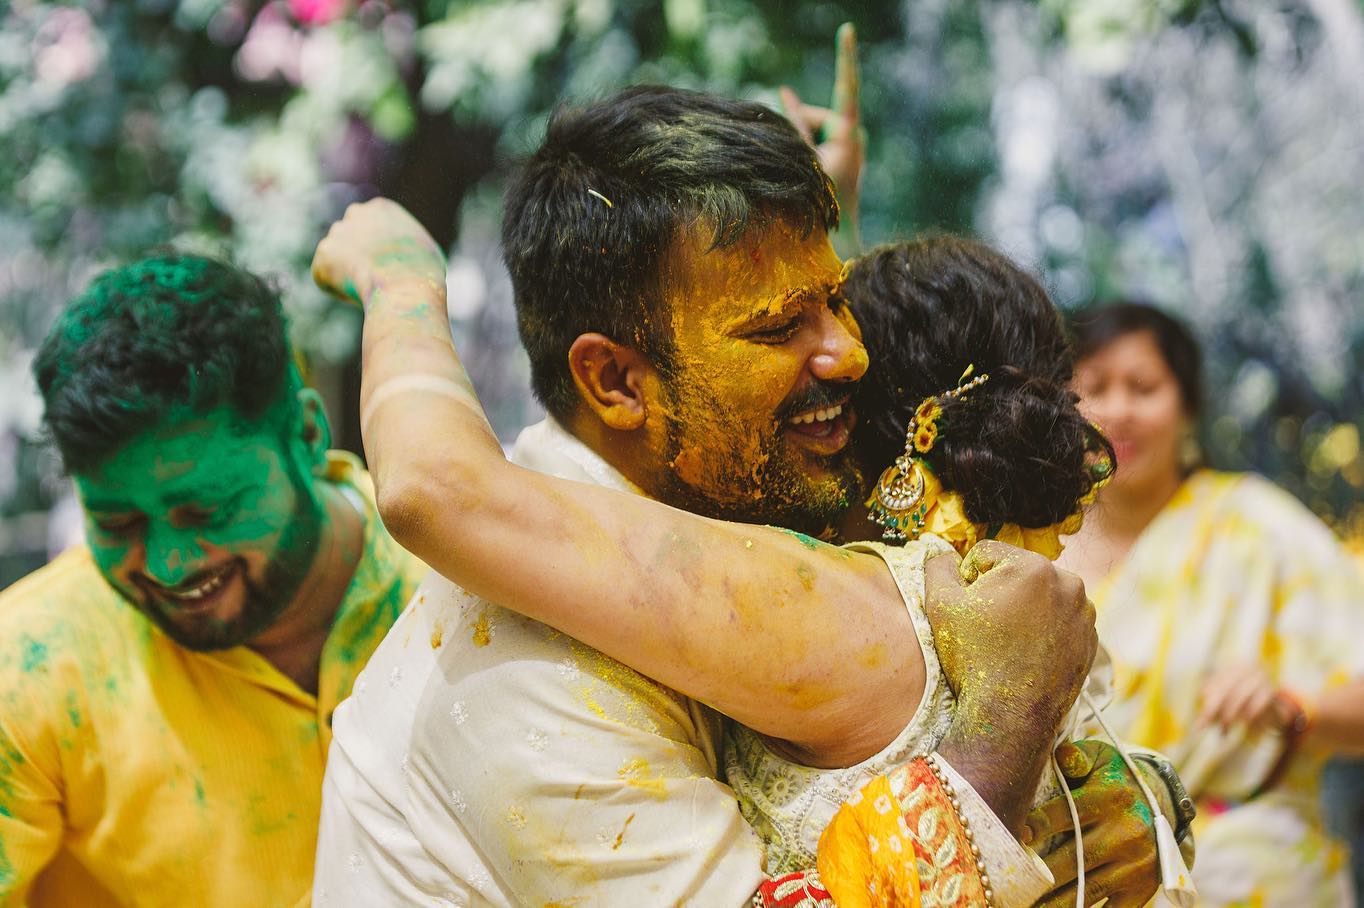 Swara Bhaskar & Fahad Ahmad Kickstarted Their Pre-Wedding Festivities